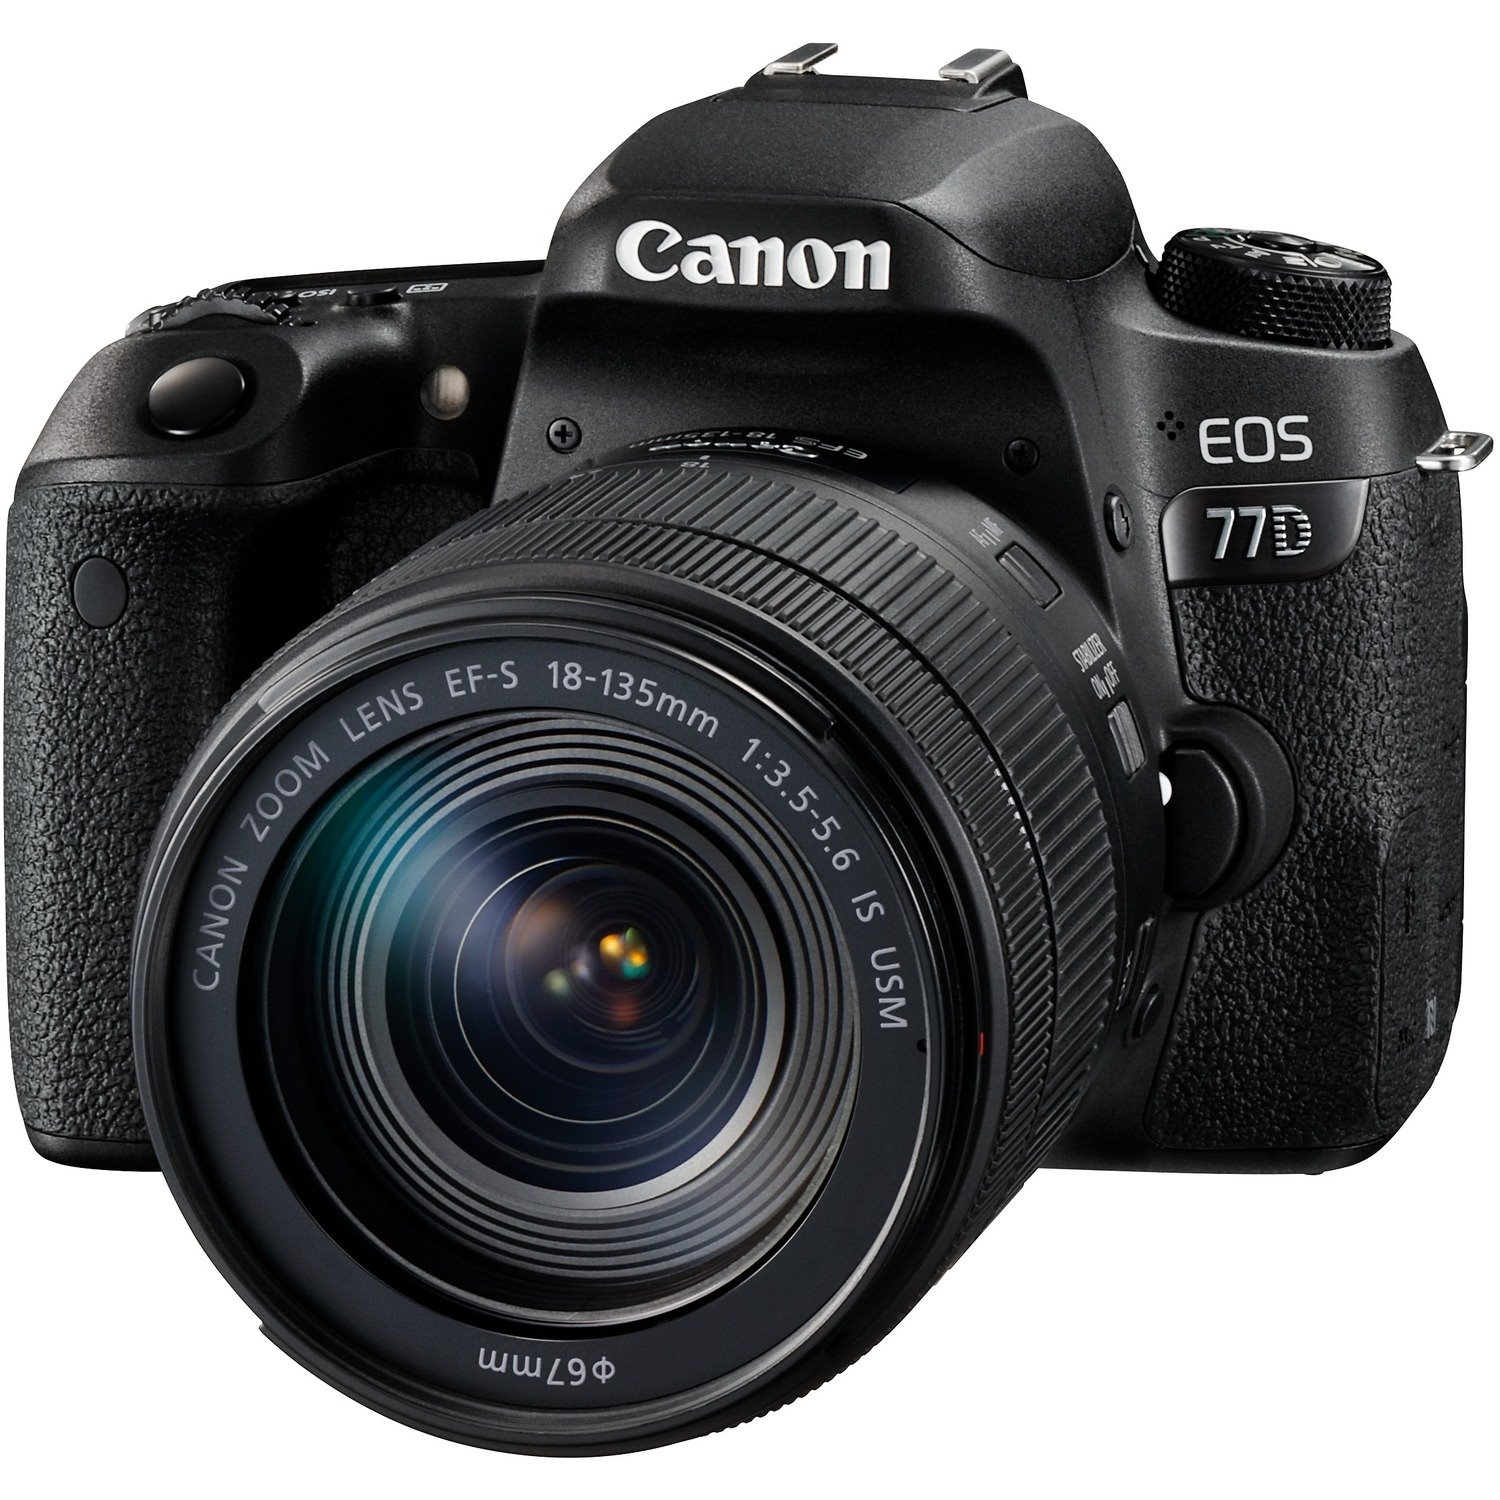 Canon EOS 77D 24.2 Megapixel Digital SLR Camera with Lens - 0.71" - 5.31"